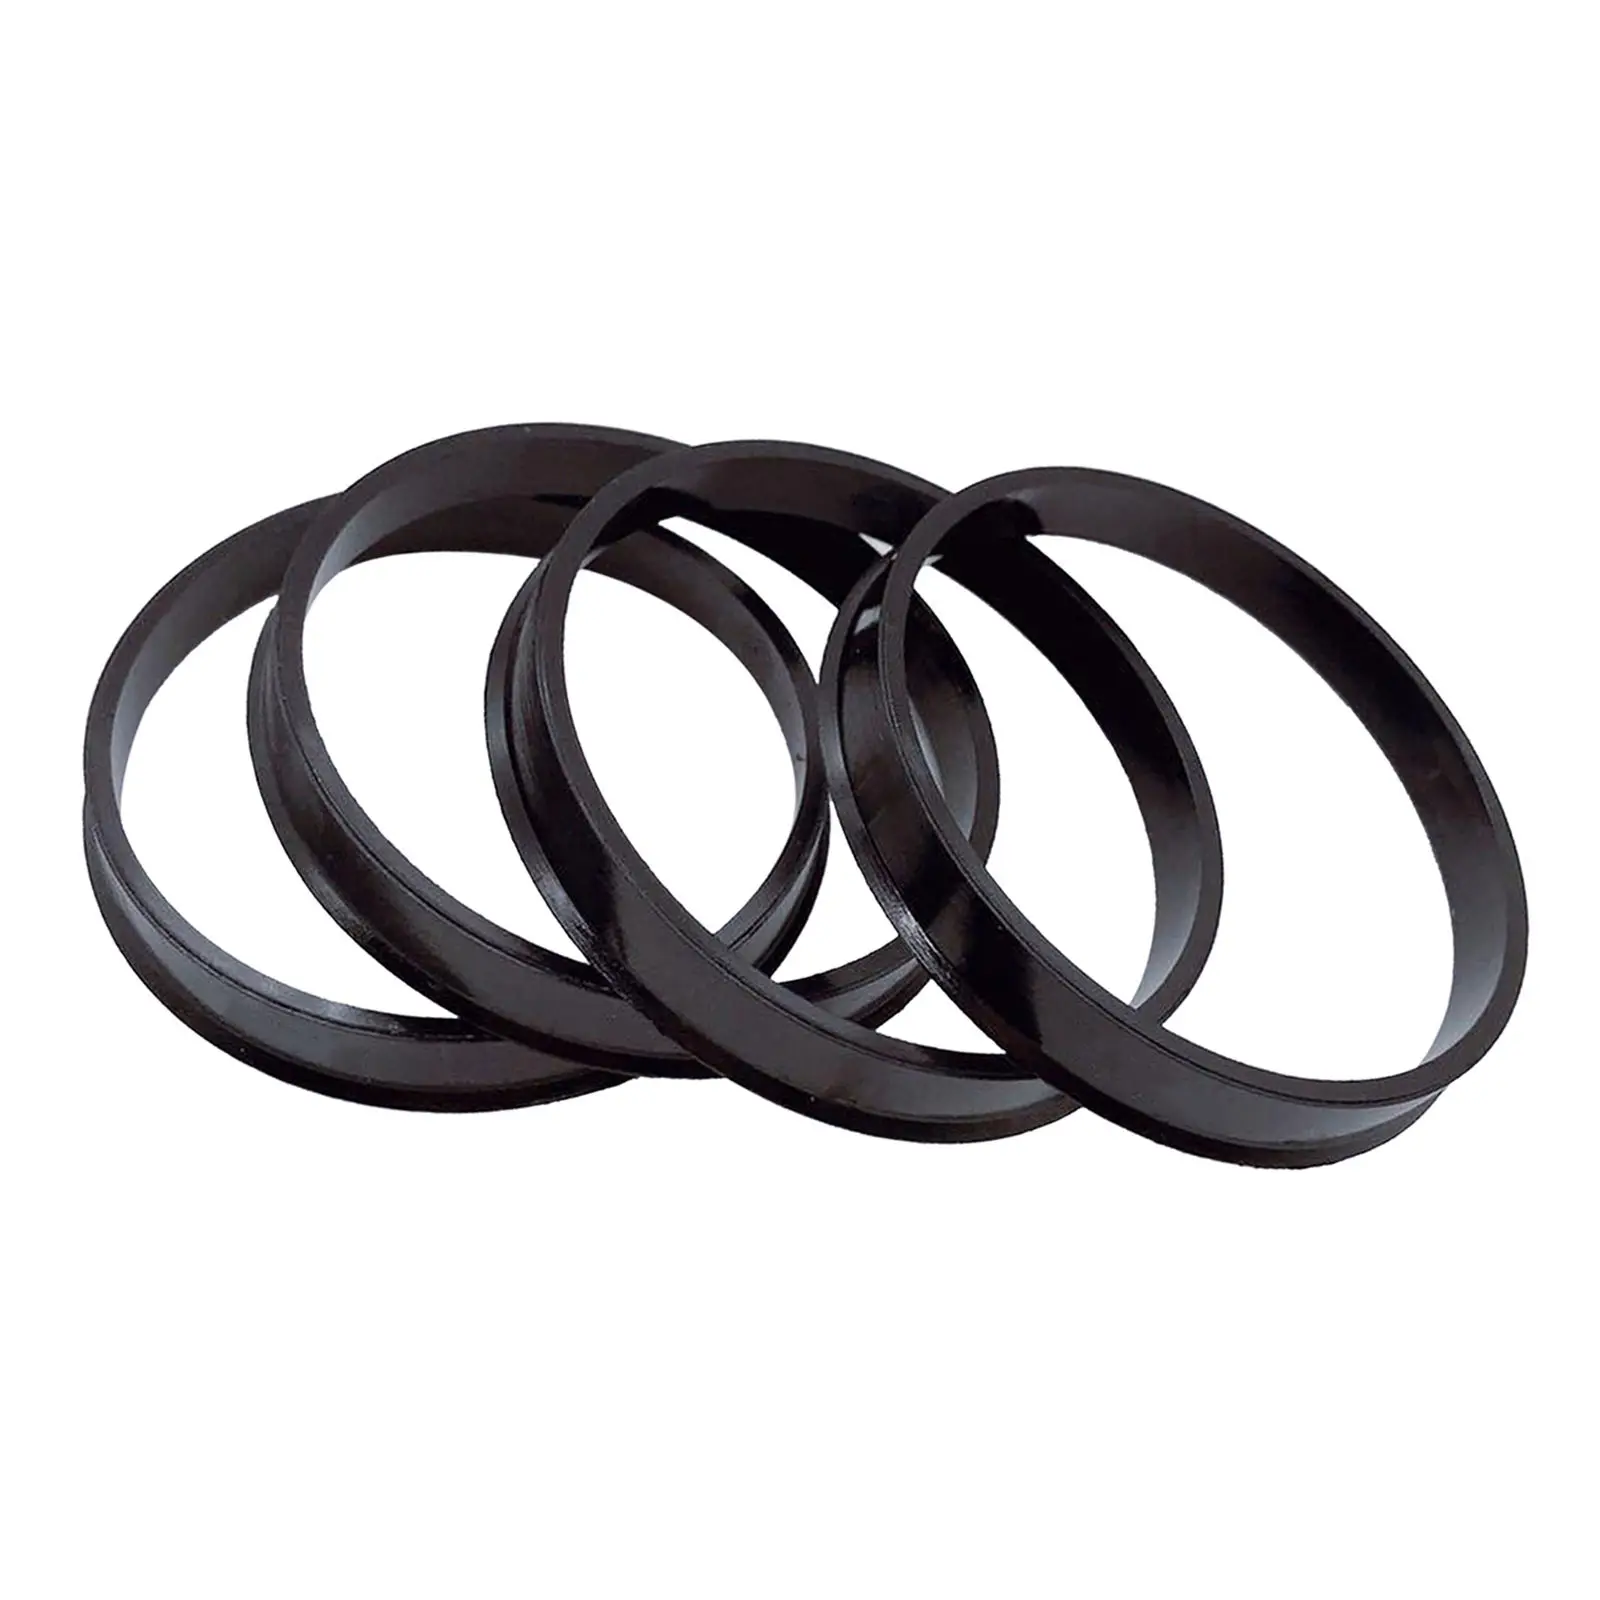 4pcs- Hub Centric Rings Car Wheel Bore Center Collar 66.6mm to 57.1mm - 4pcs Black Plastic